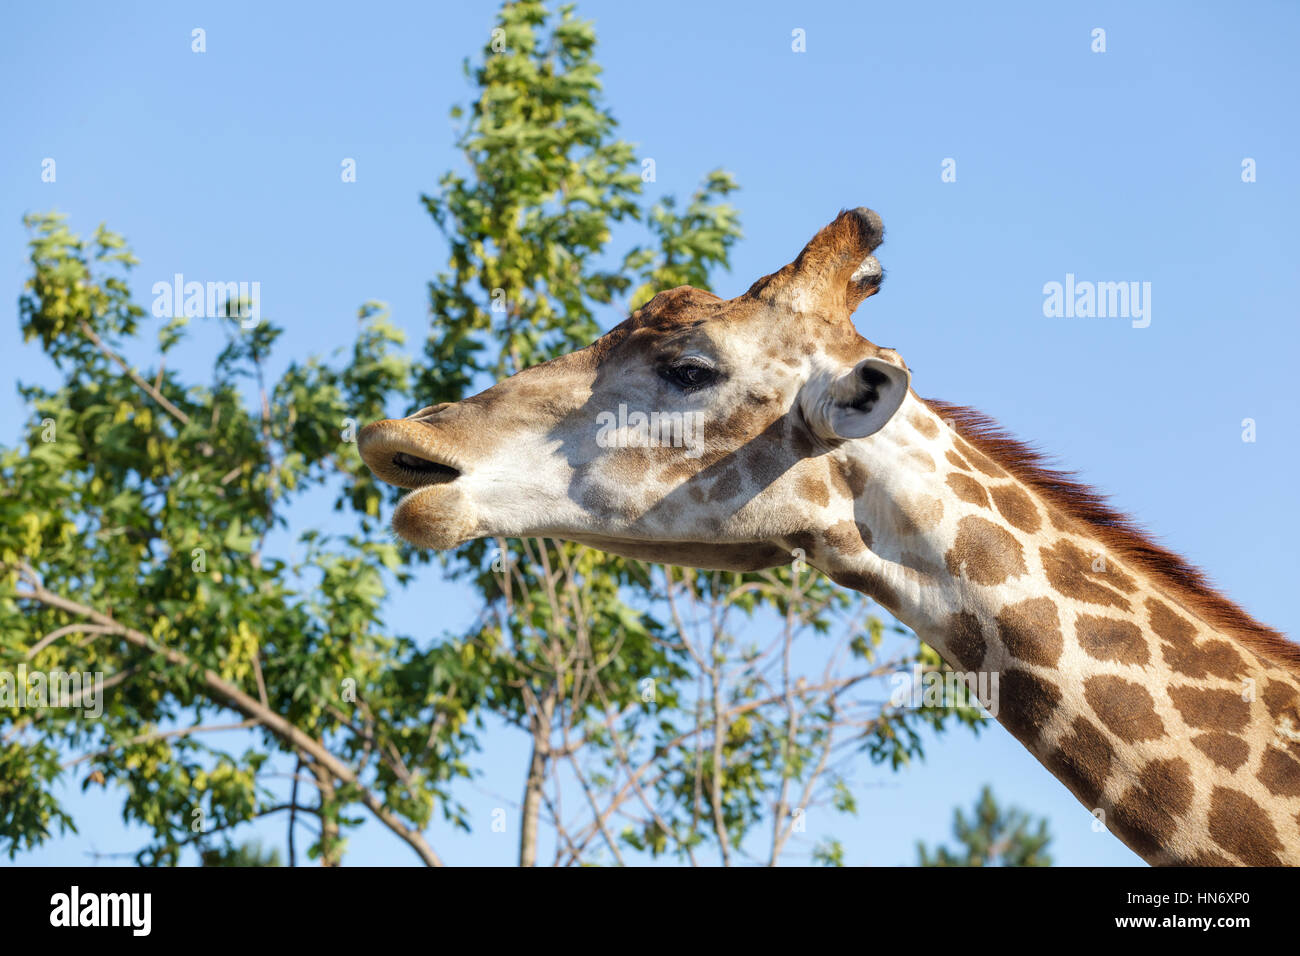 Giraffe on the tree and sky background Stock Photo